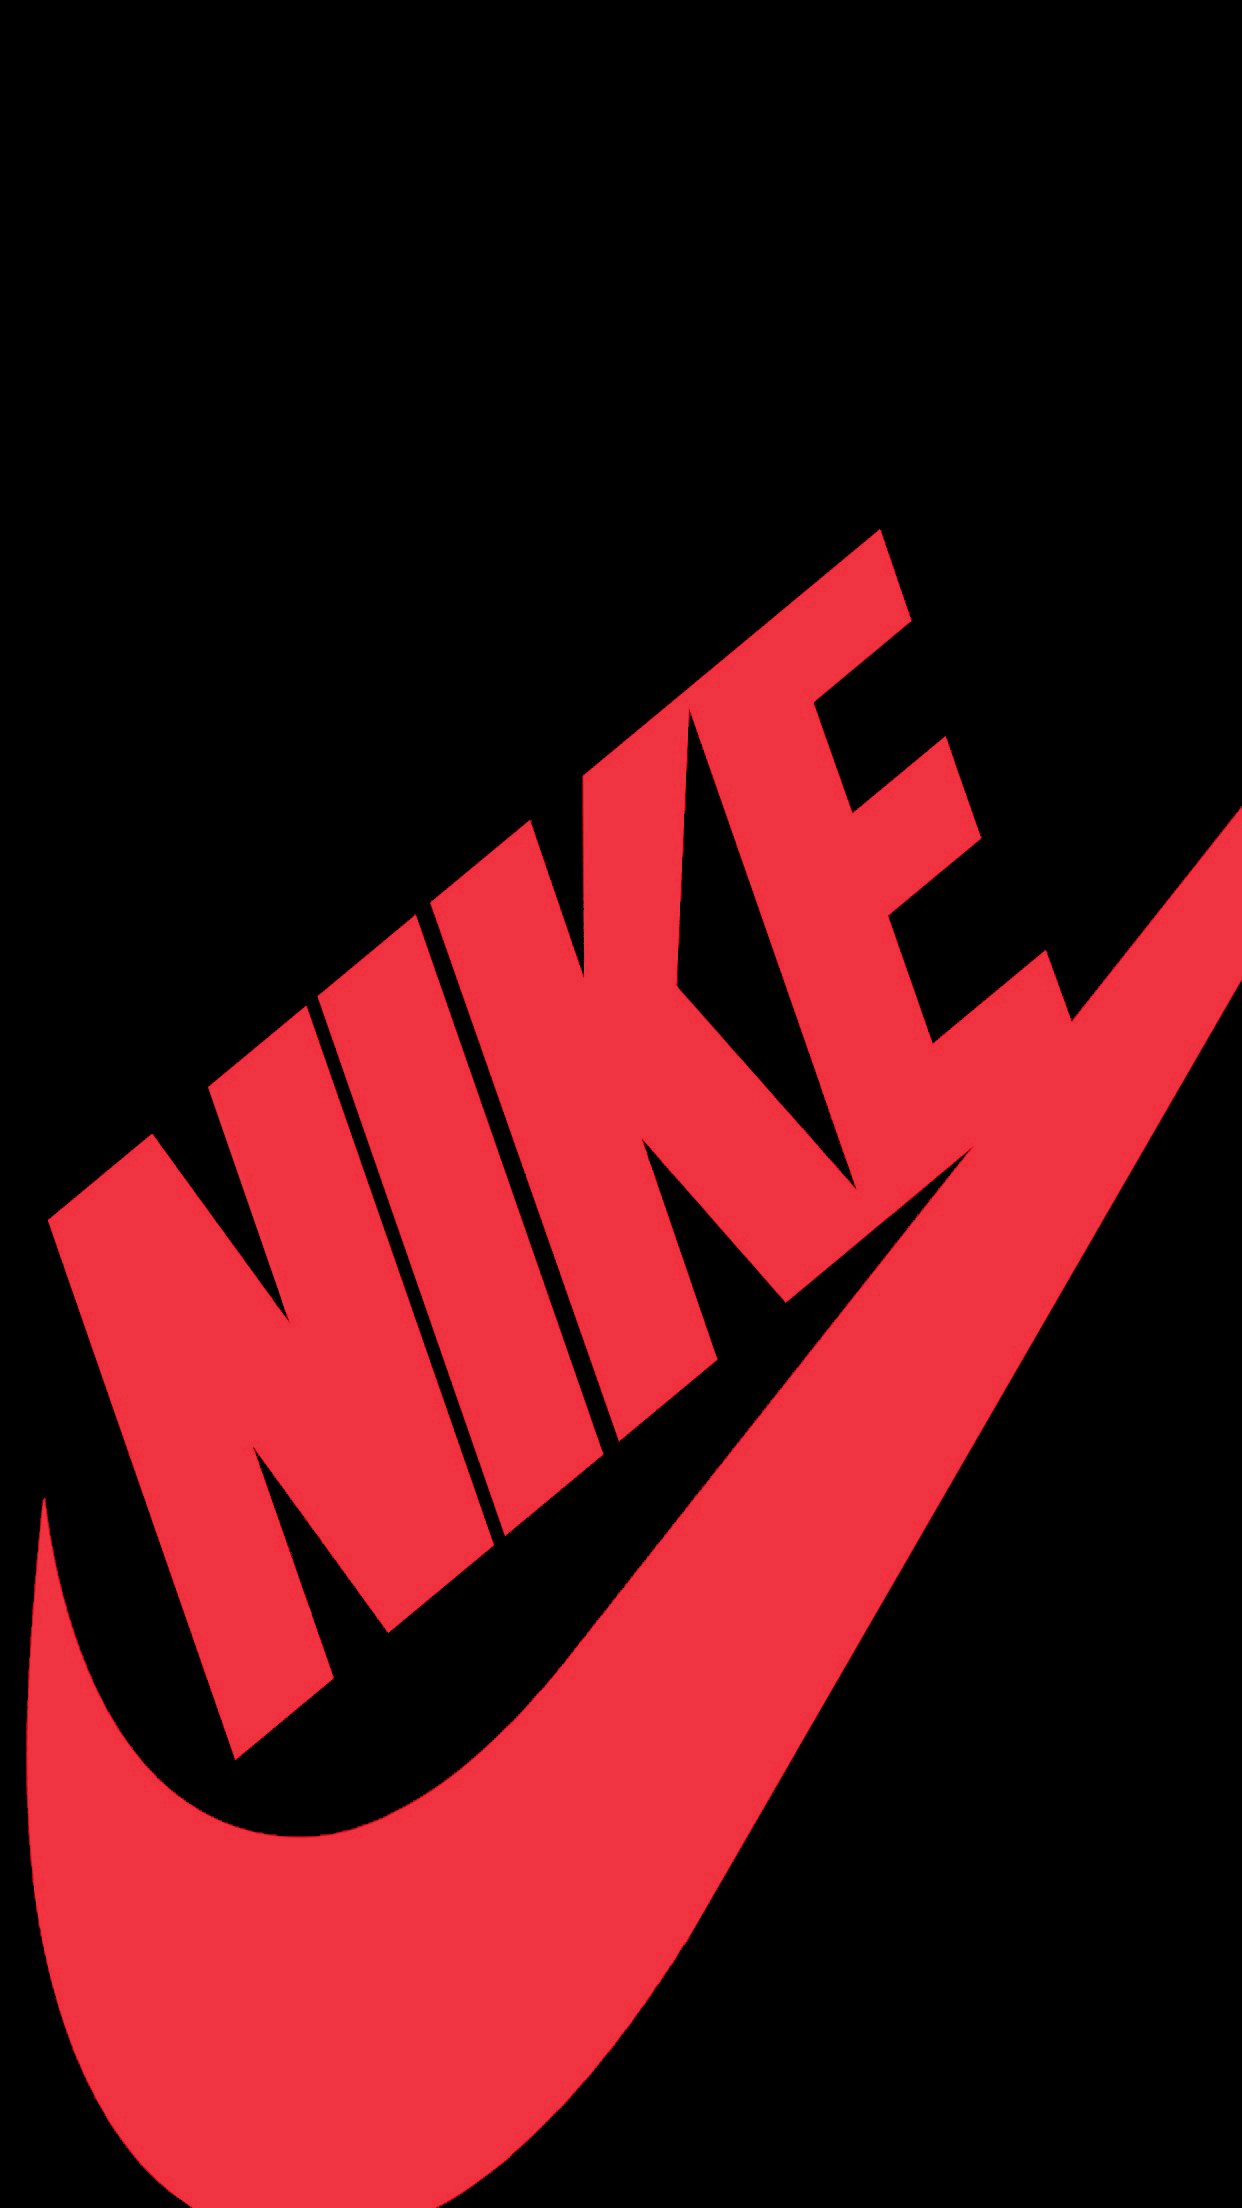 Nike Led Wallpapers